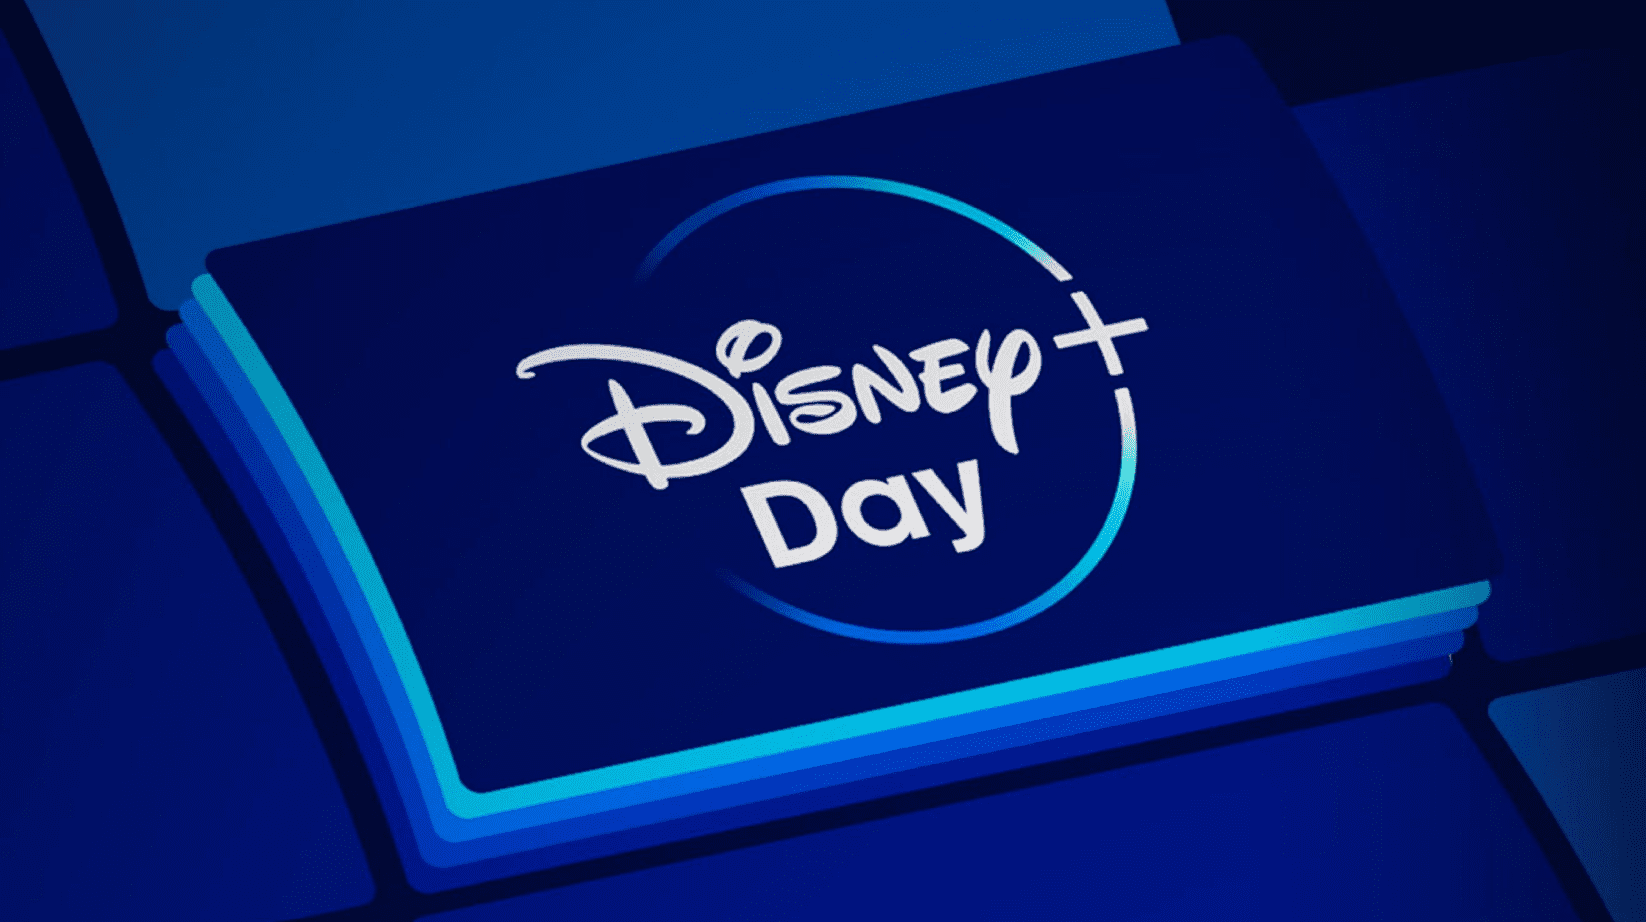 Disney+ Day 8